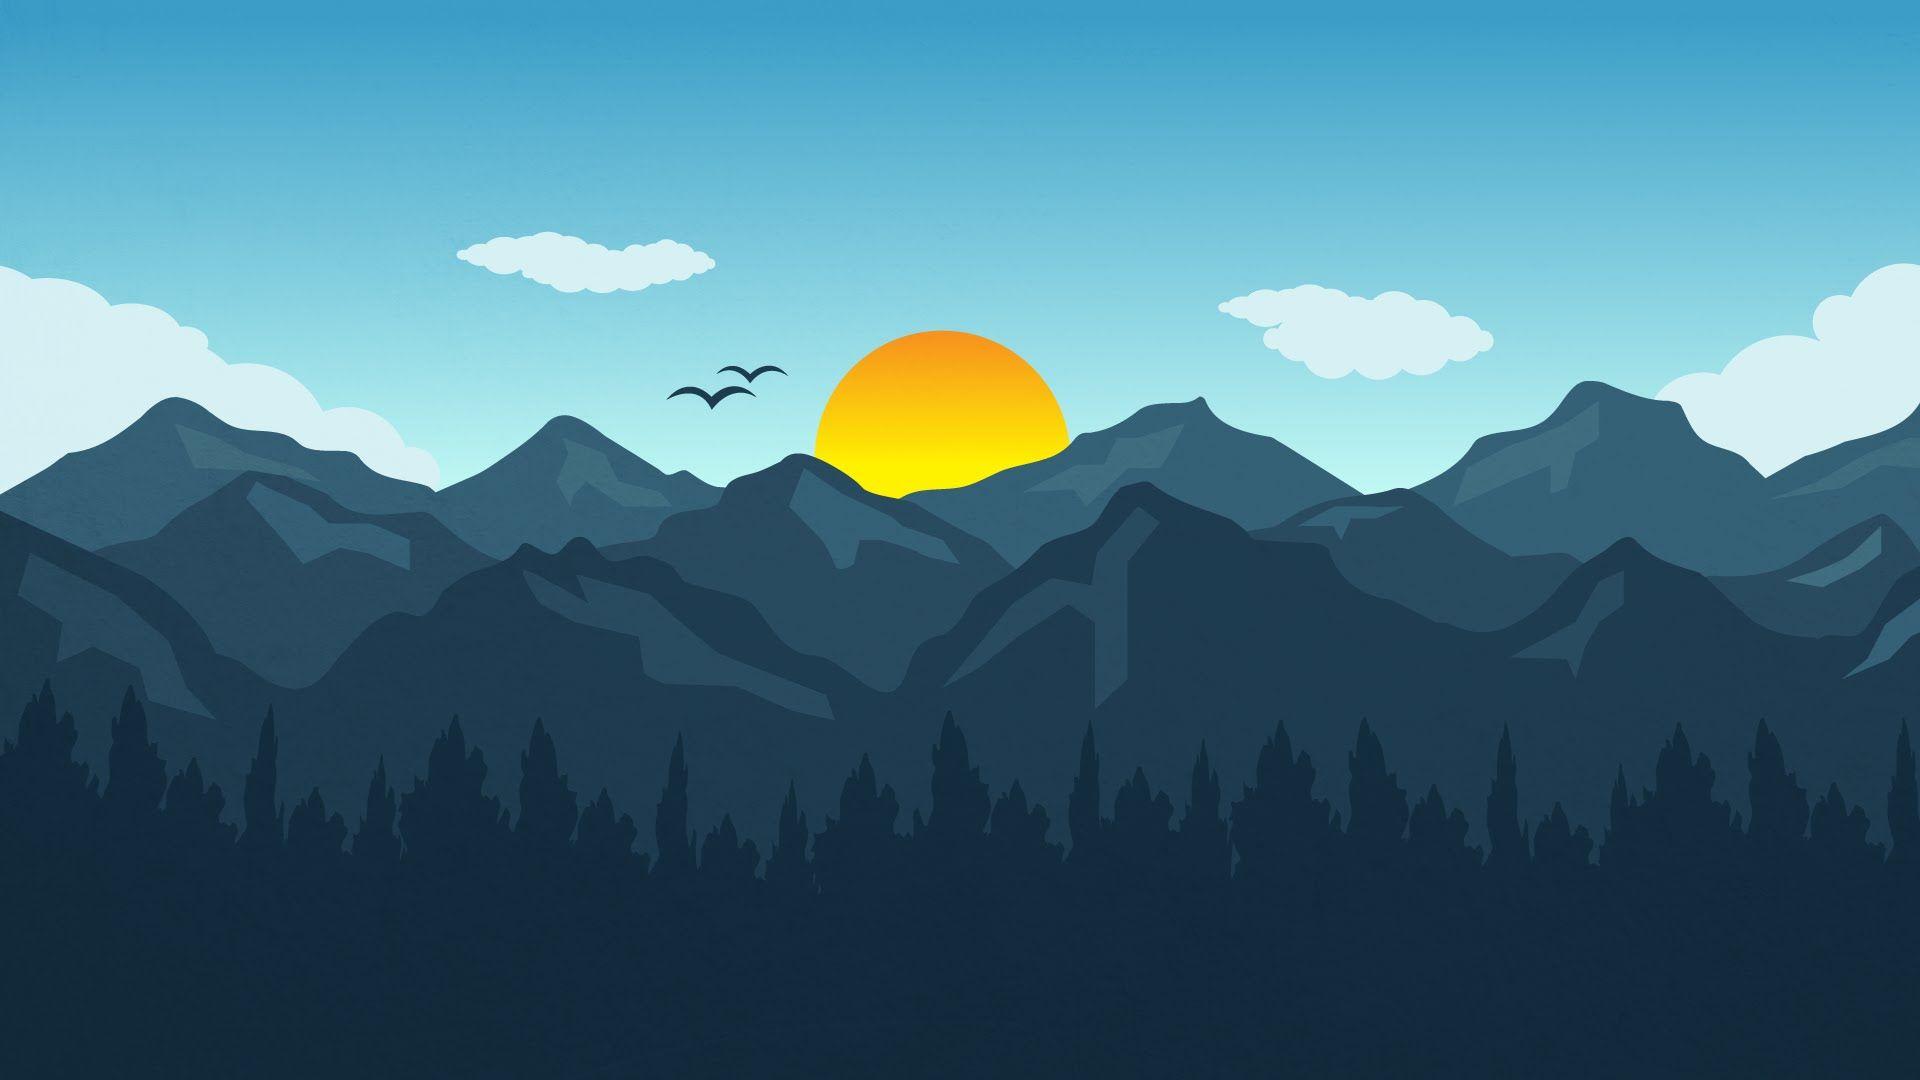 backgrounds illustrator free download